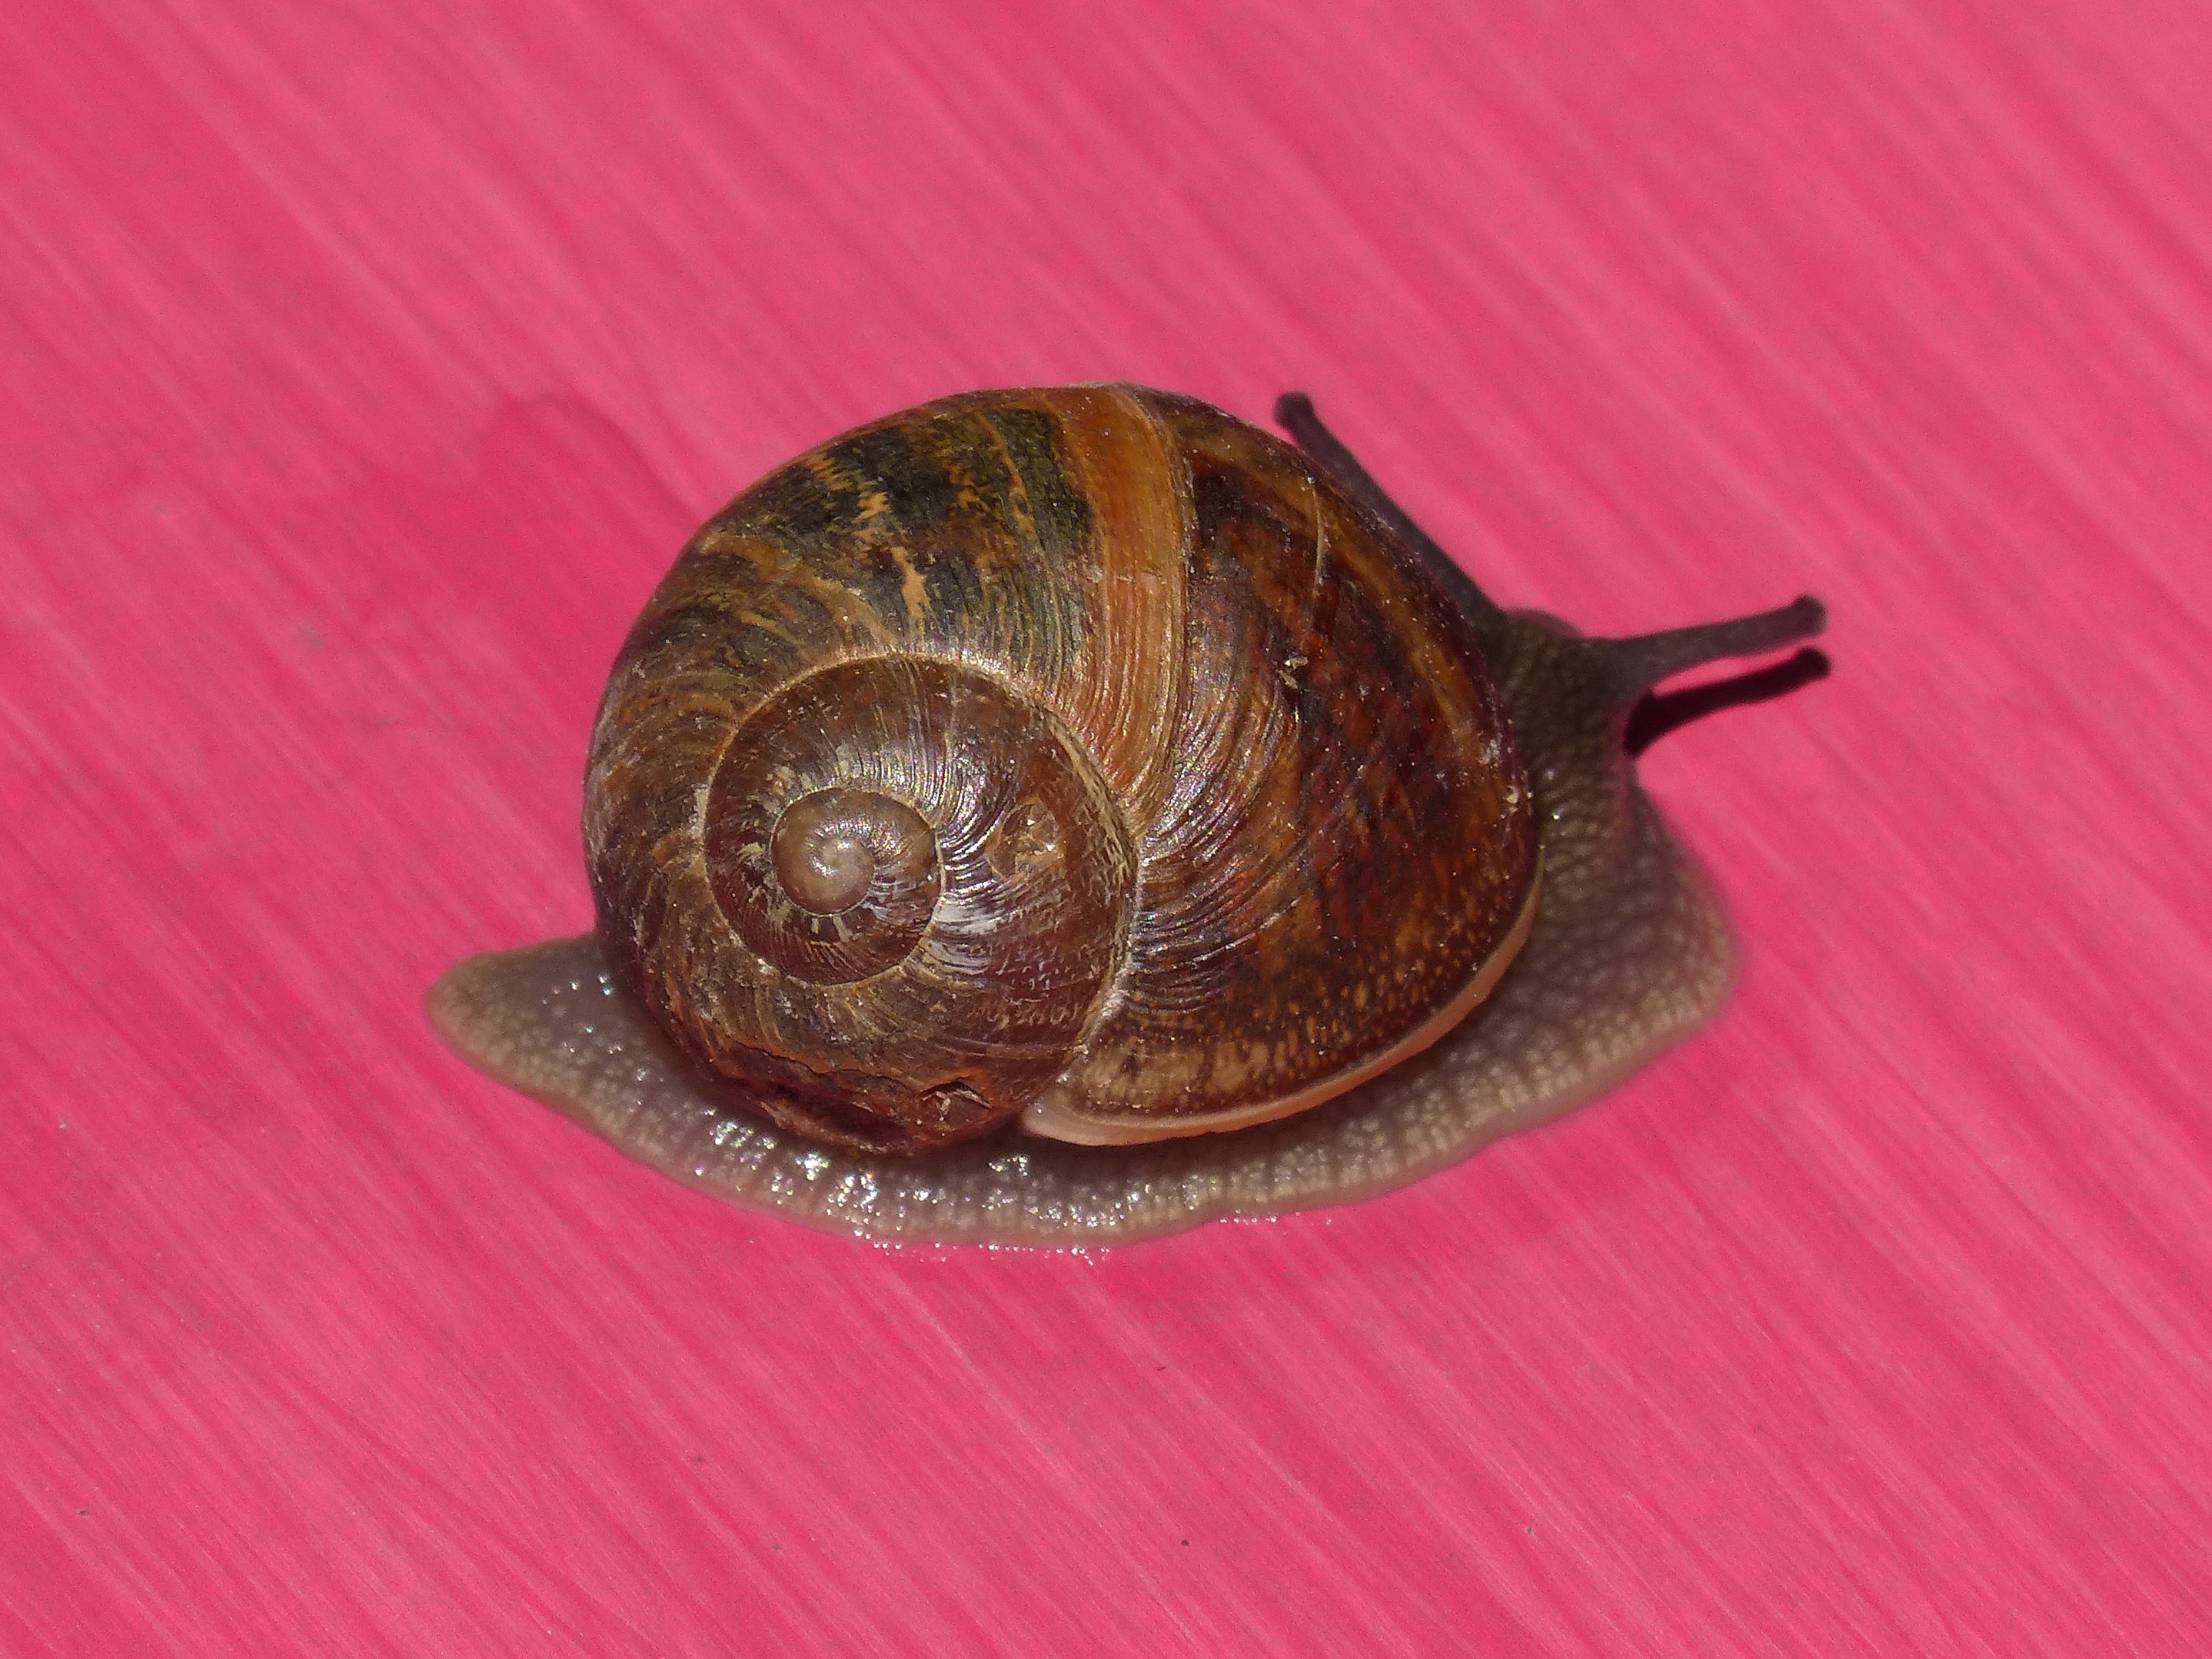 Pink Background, Snail, snail, one animal